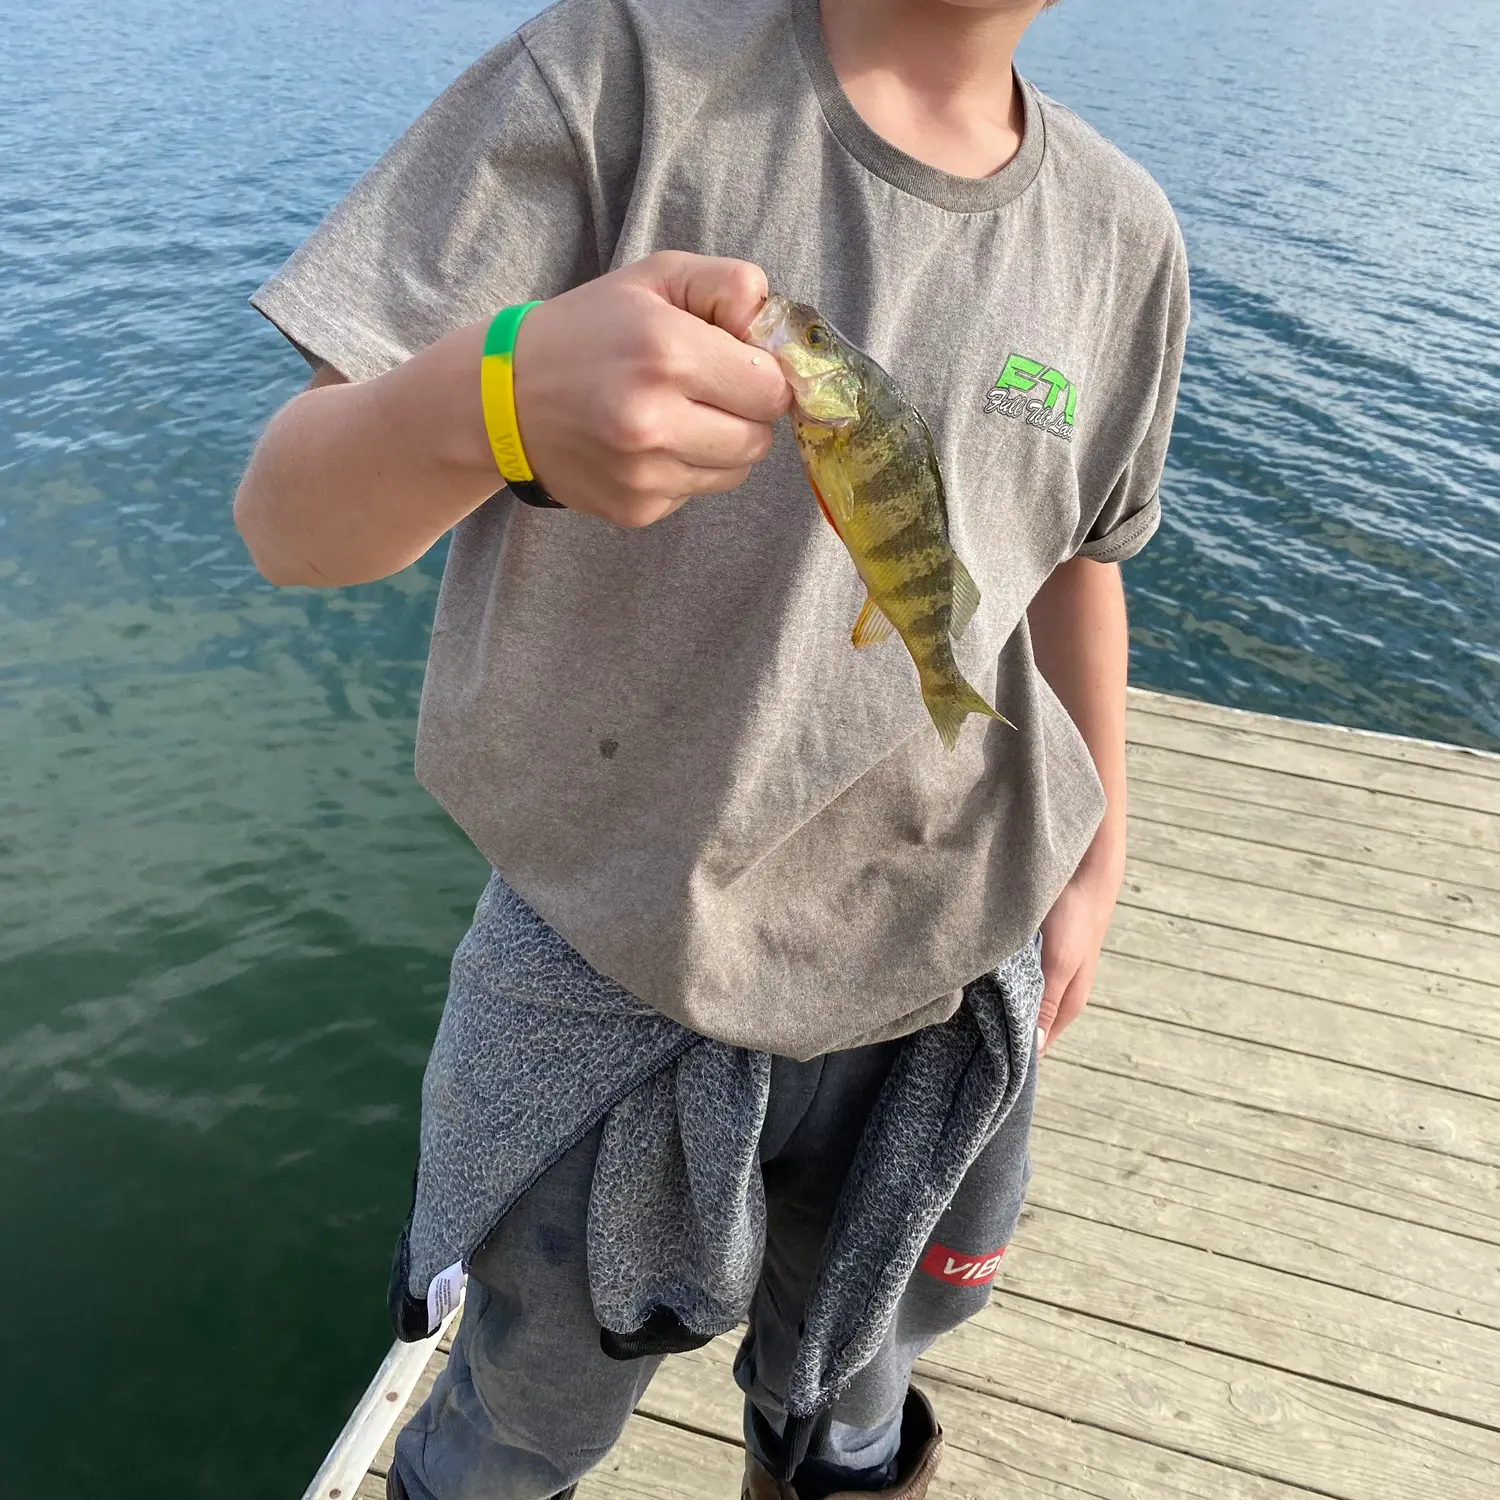 Fishing for Yellow Perch (Lake Marburg, Hanover P.A) 